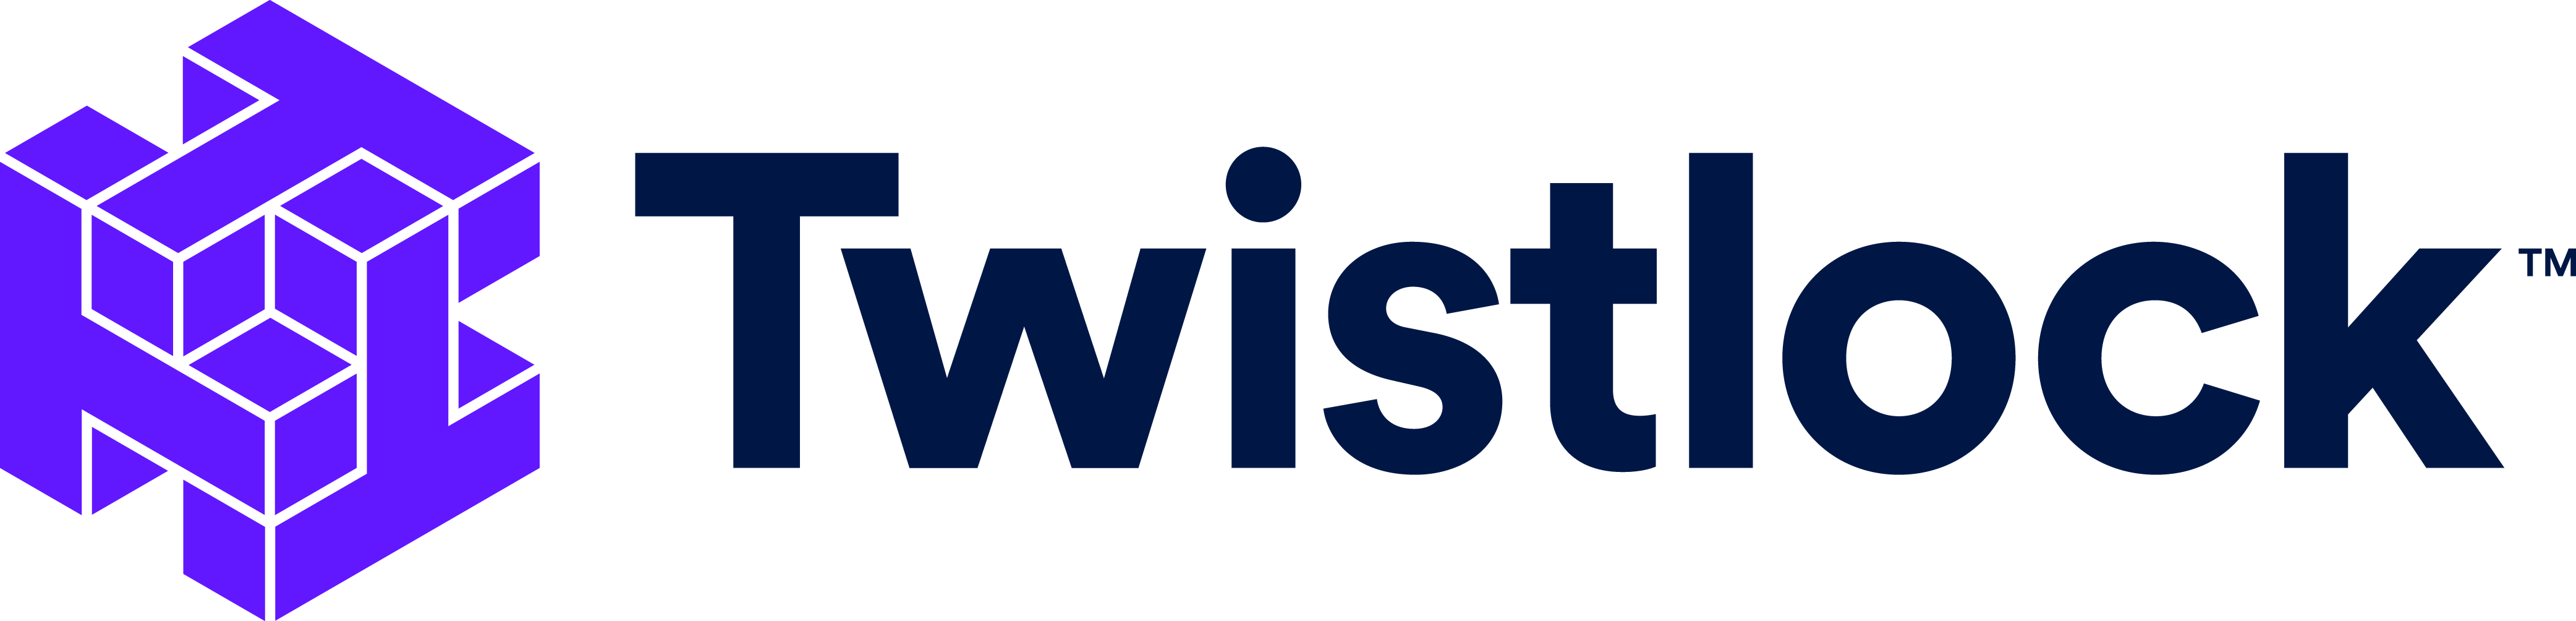 Twistlock logo